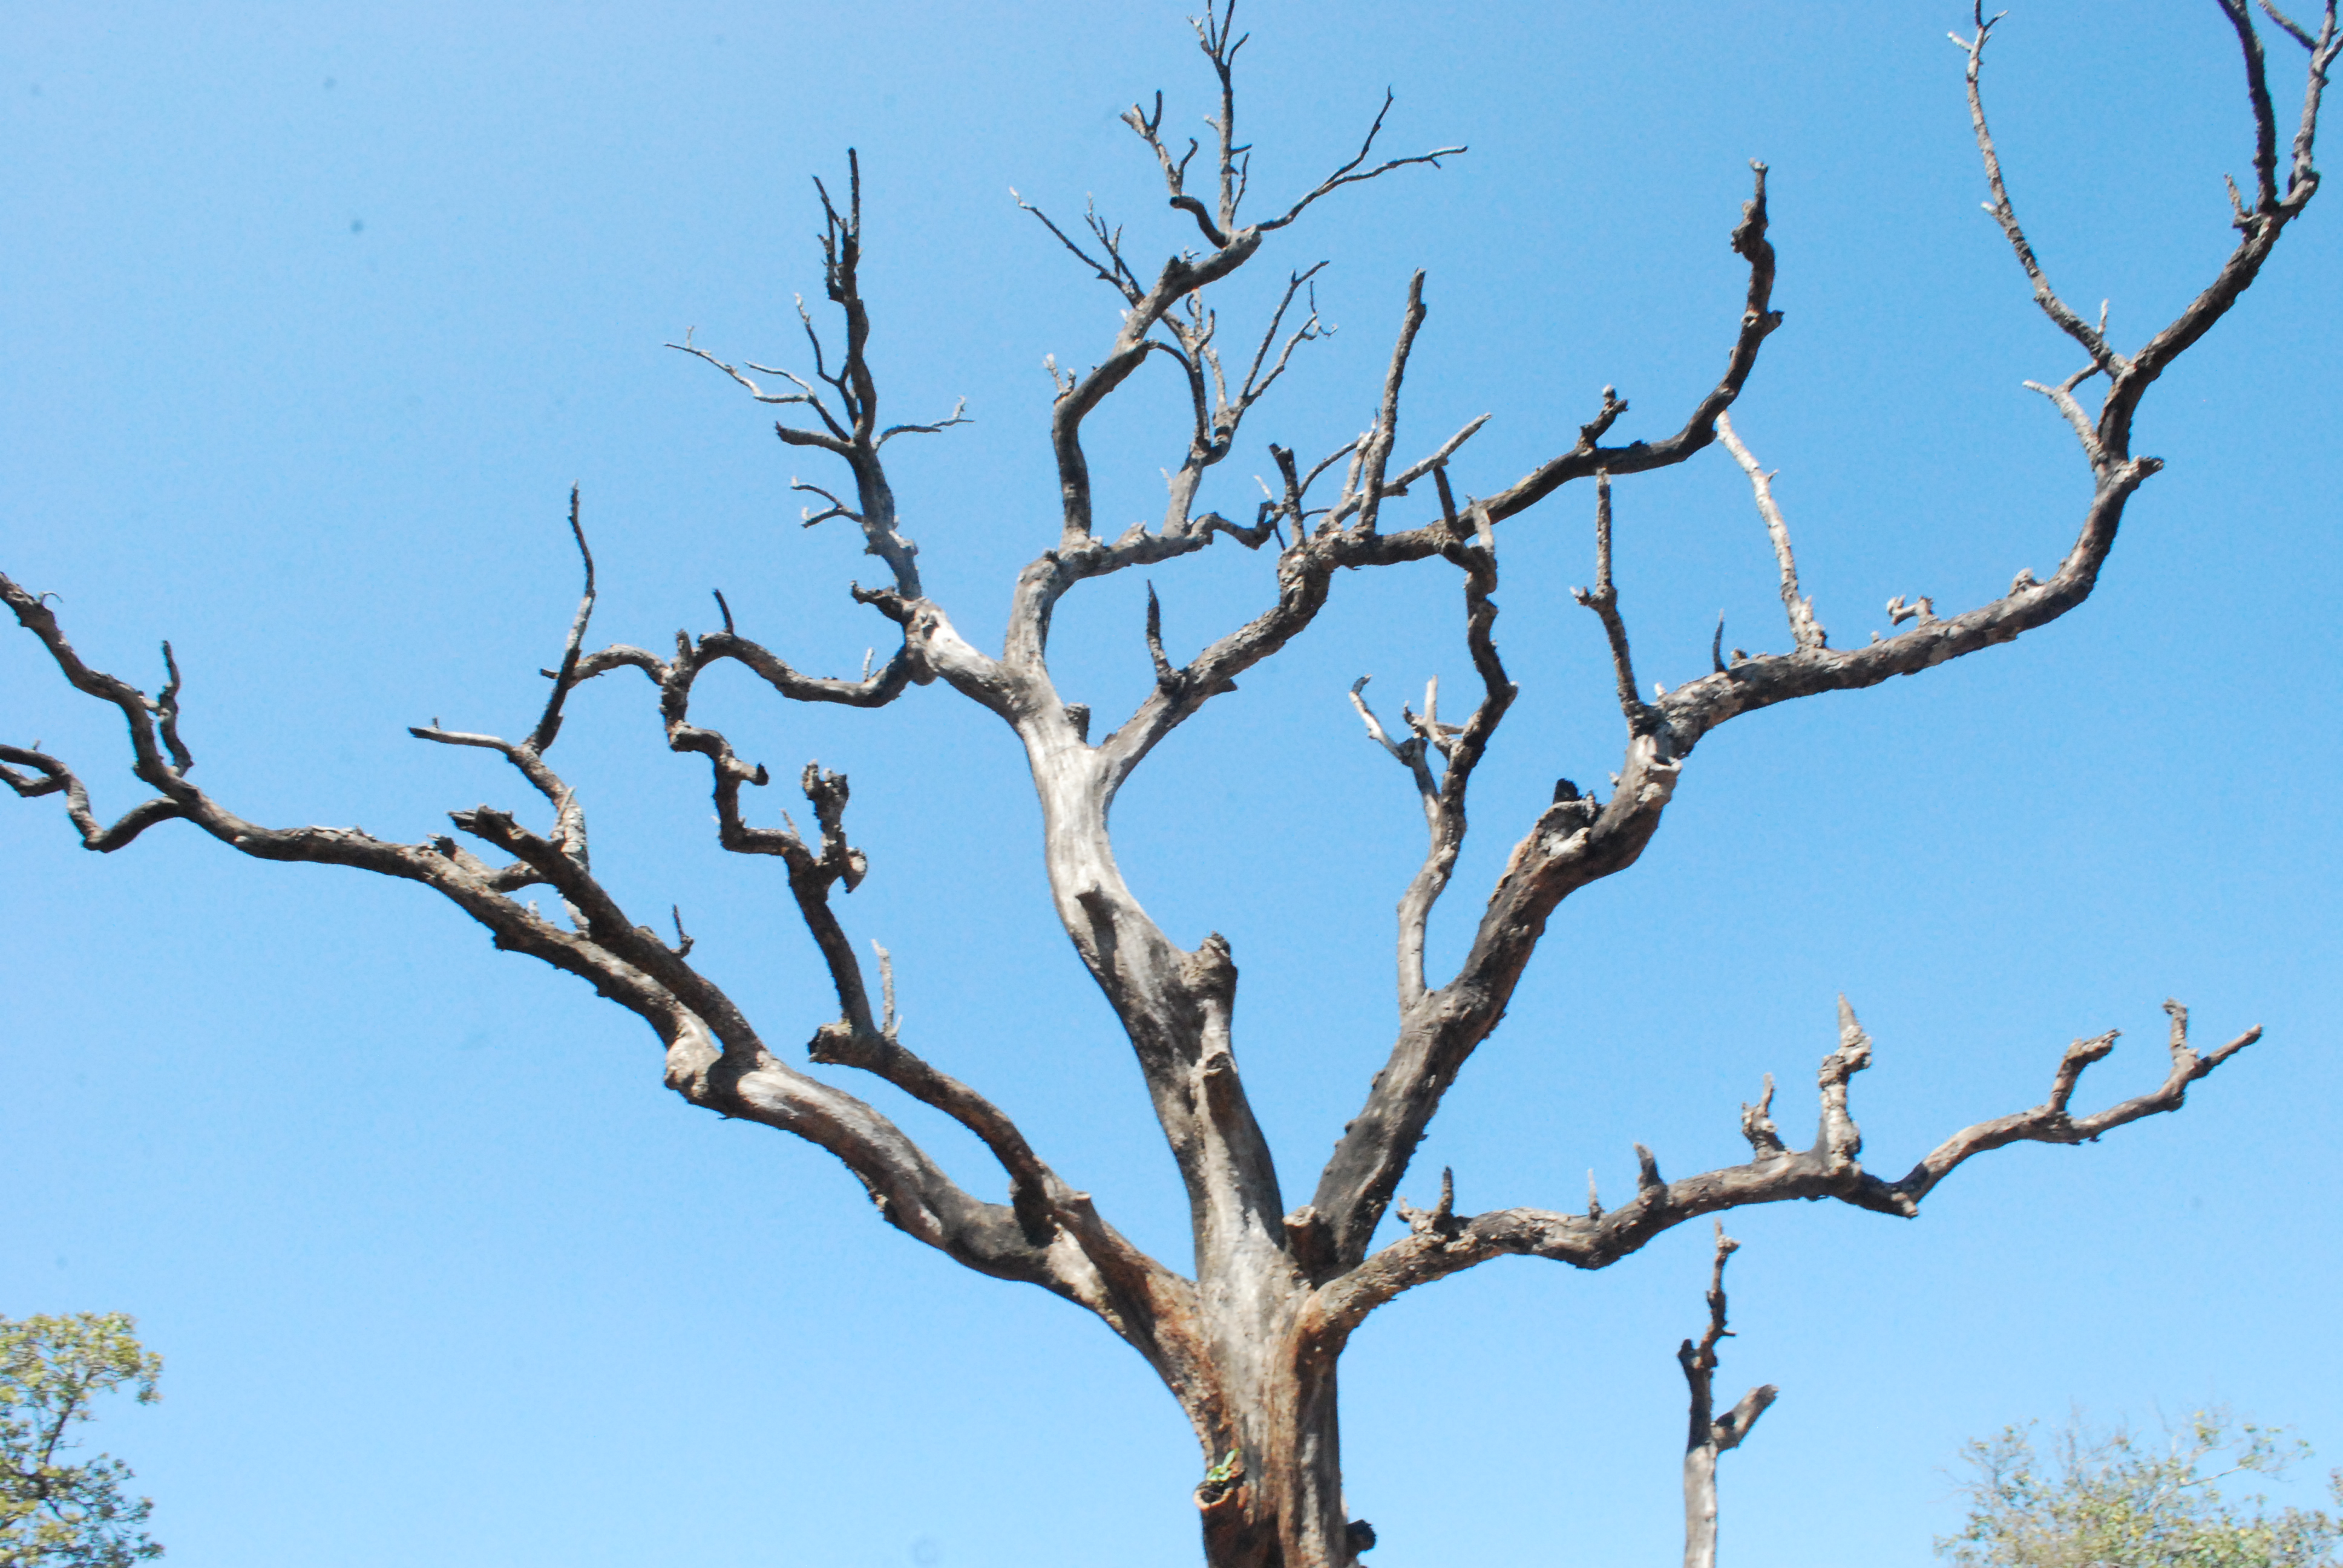 File:A Dry Tree.jpg - Wikimedia Commons